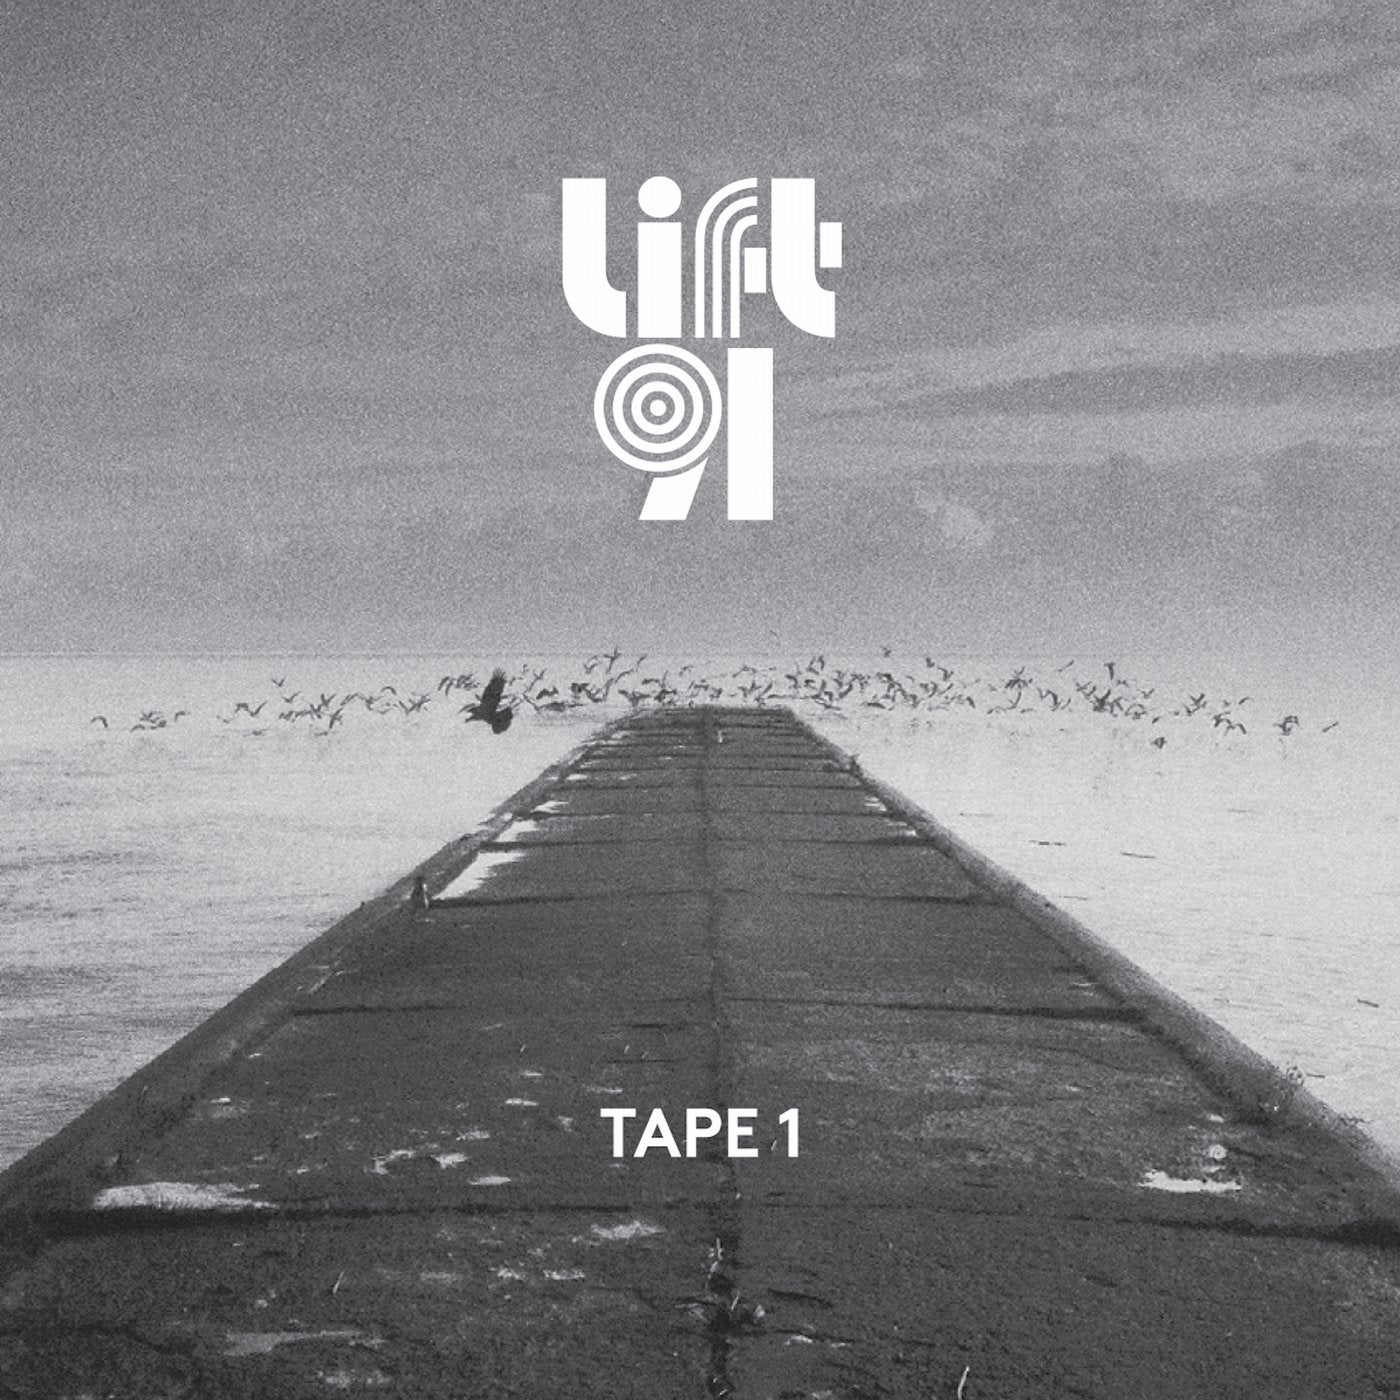 Tape 1